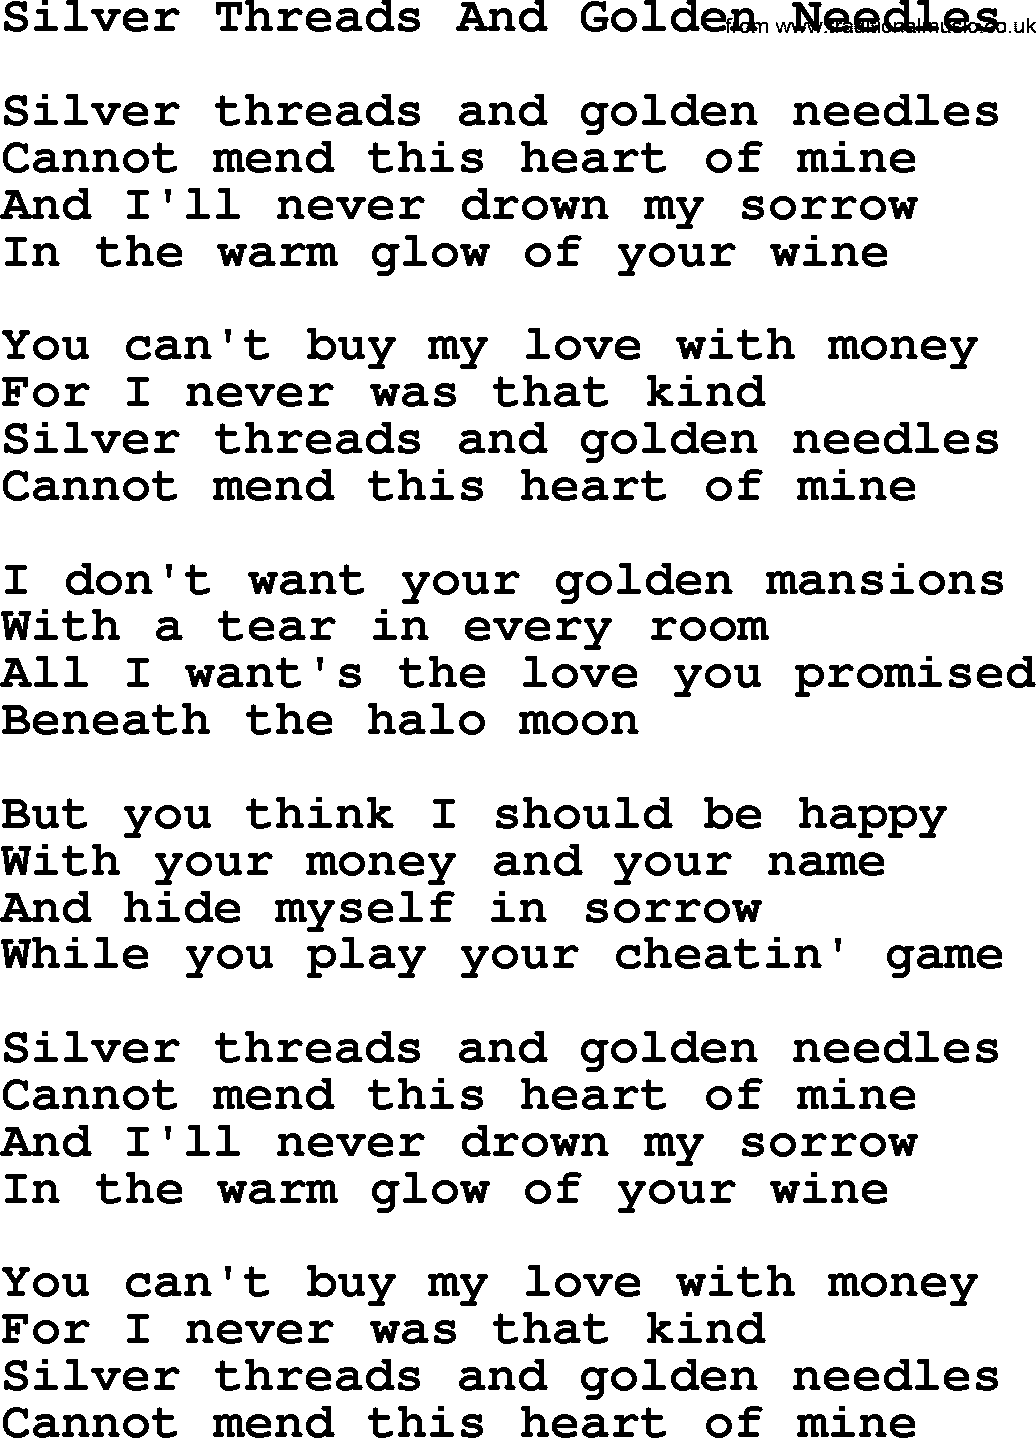 Dolly Parton song Silver Threads And Golden Needles.txt lyrics